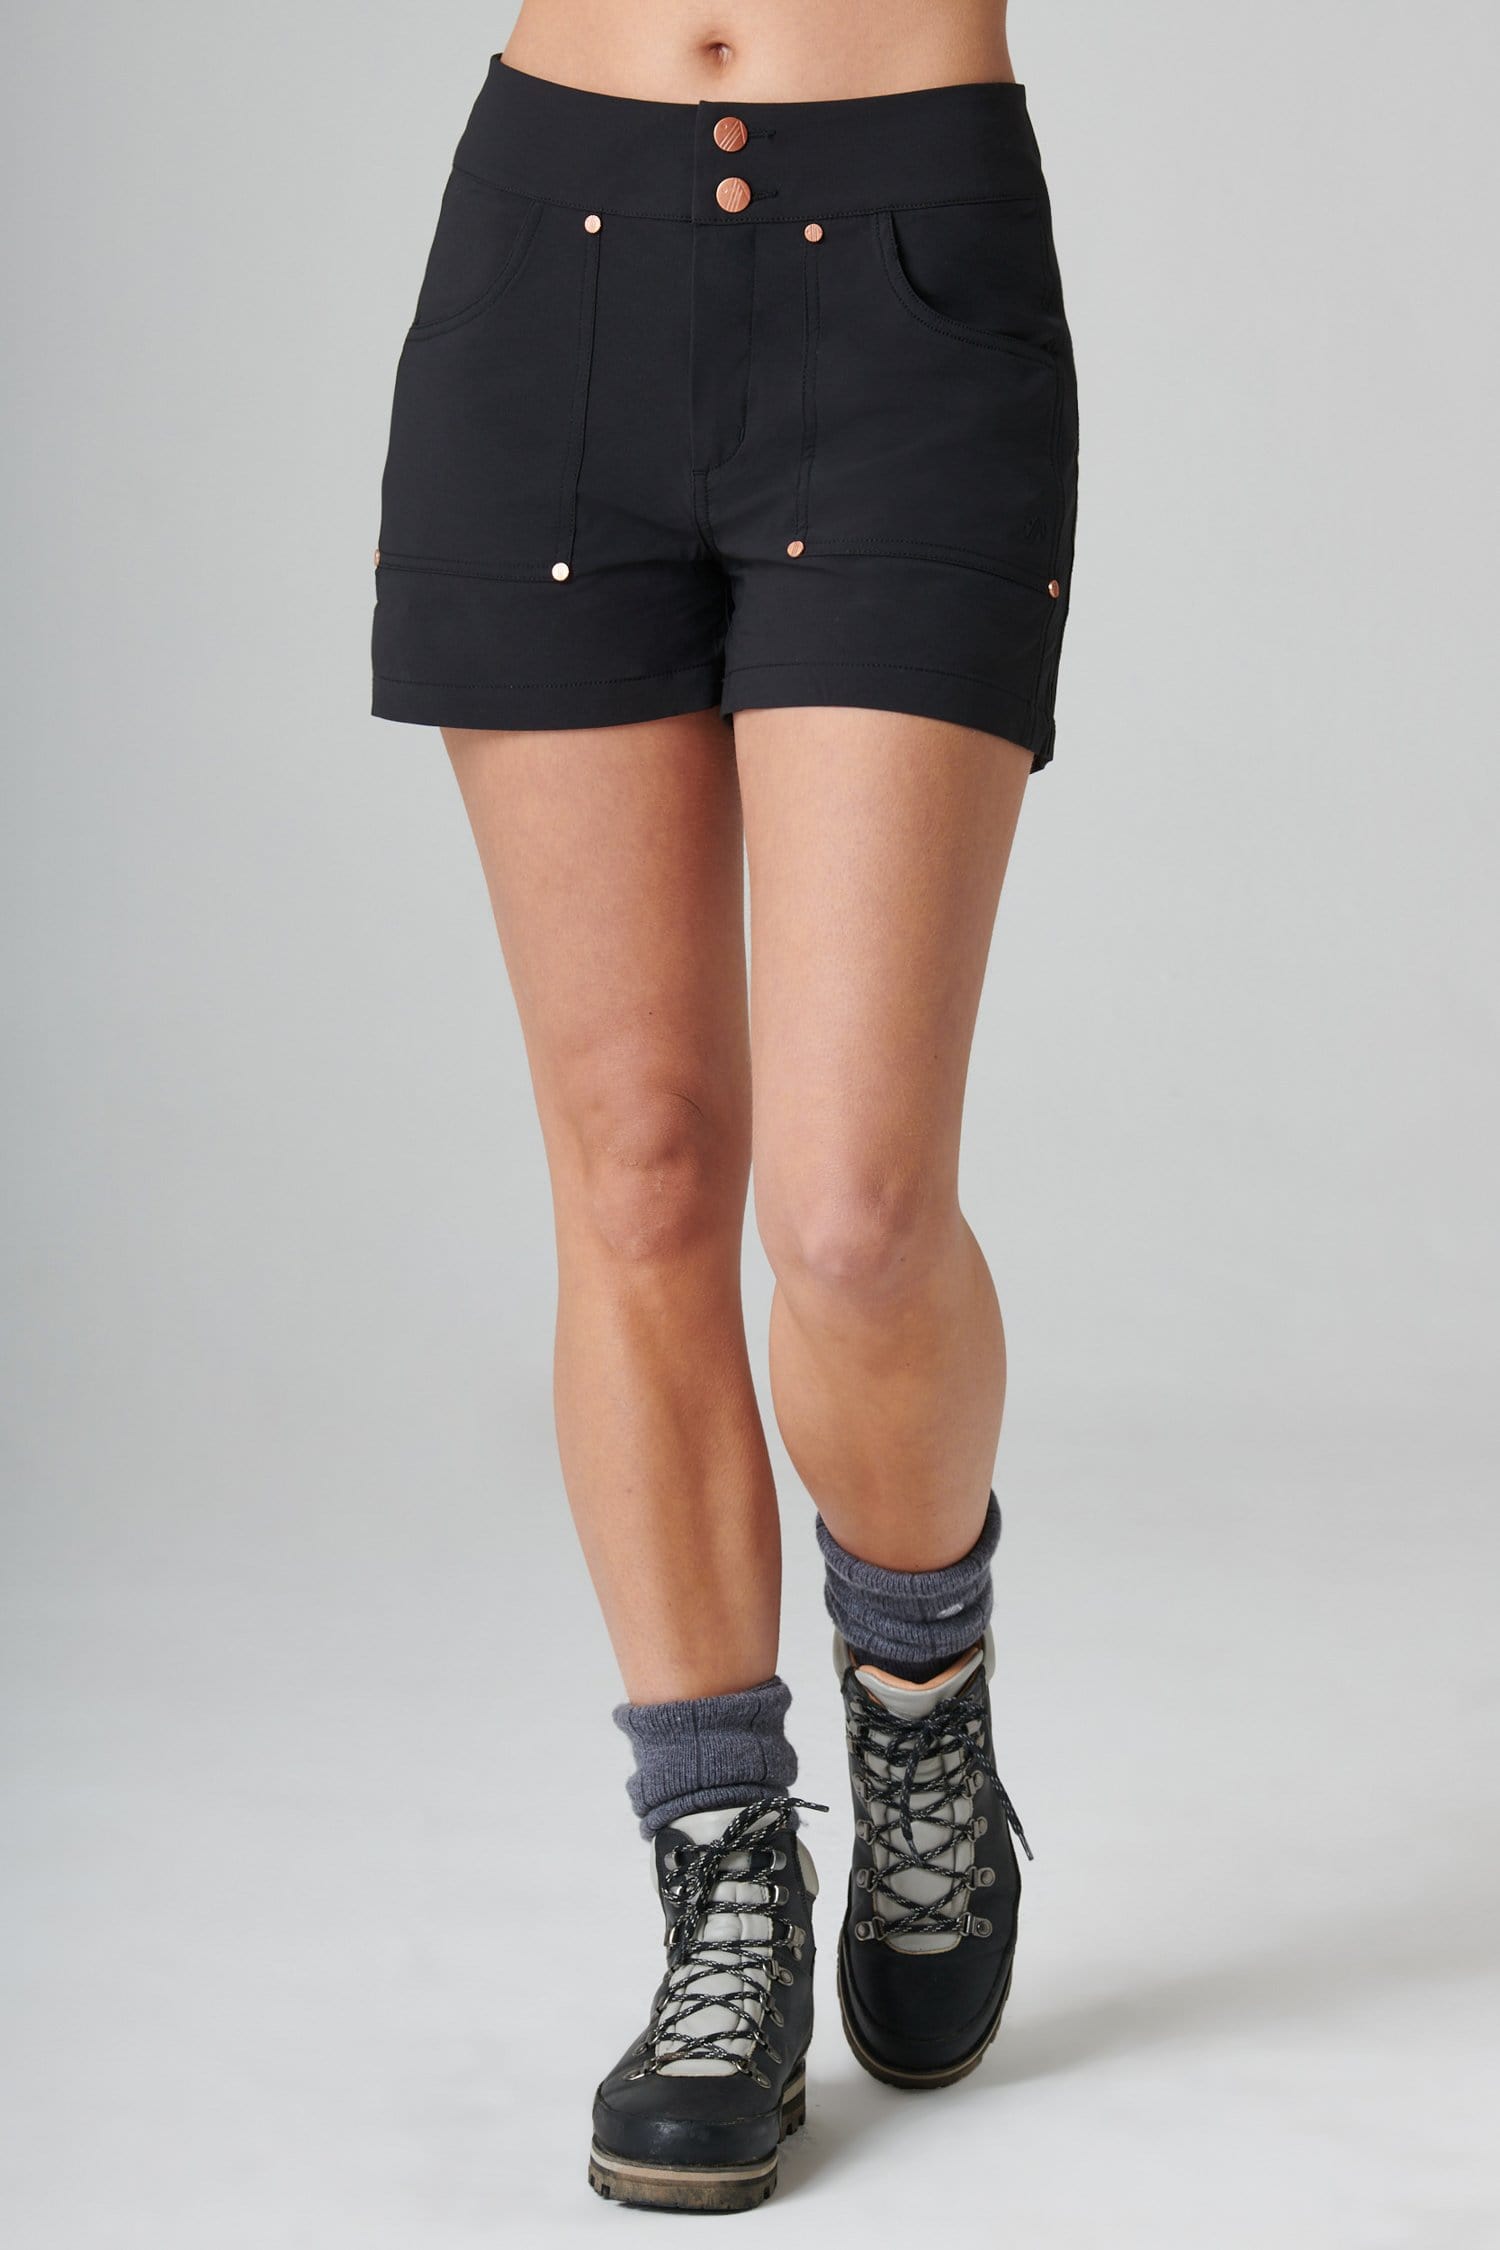 Trek Shorts - Black - 28 / Uk10 - Womens - Acai Outdoorwear